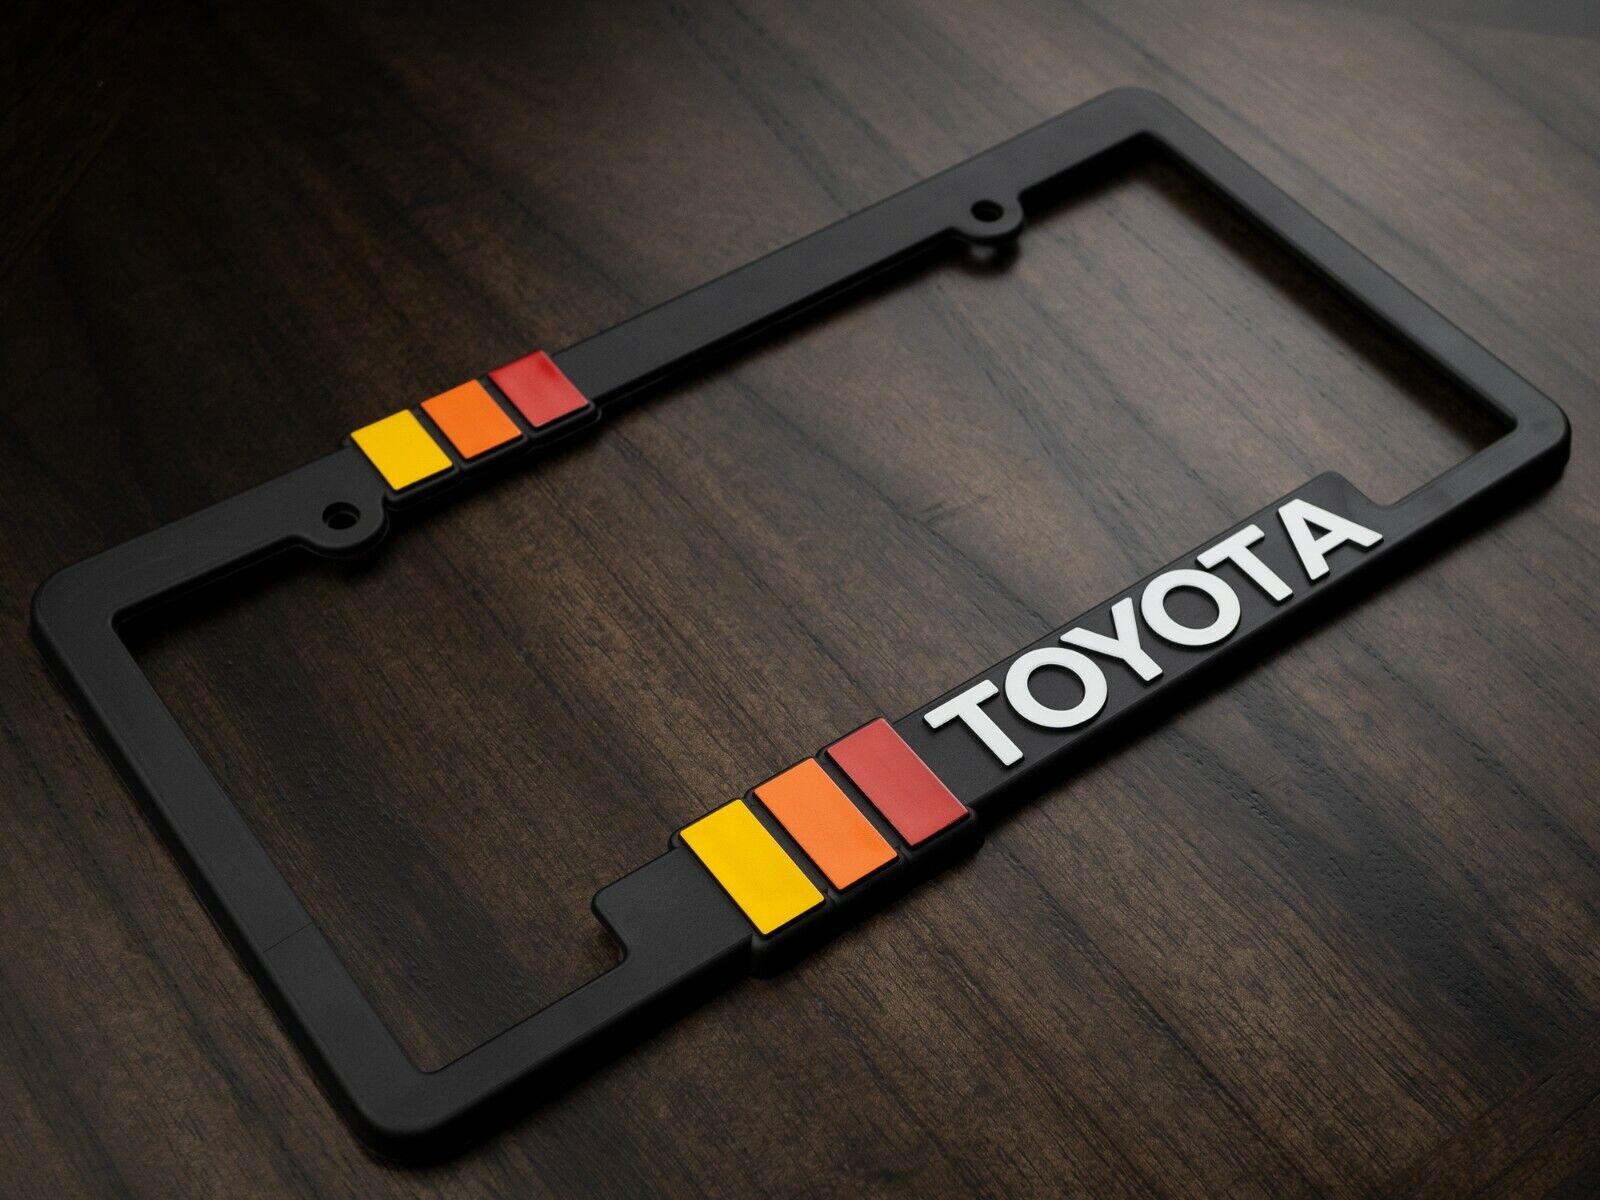 Toyota-Retro-Style-License-Plate-Frame-TRD-Offroad-Tacoma-FJ-Cruiser-4x4